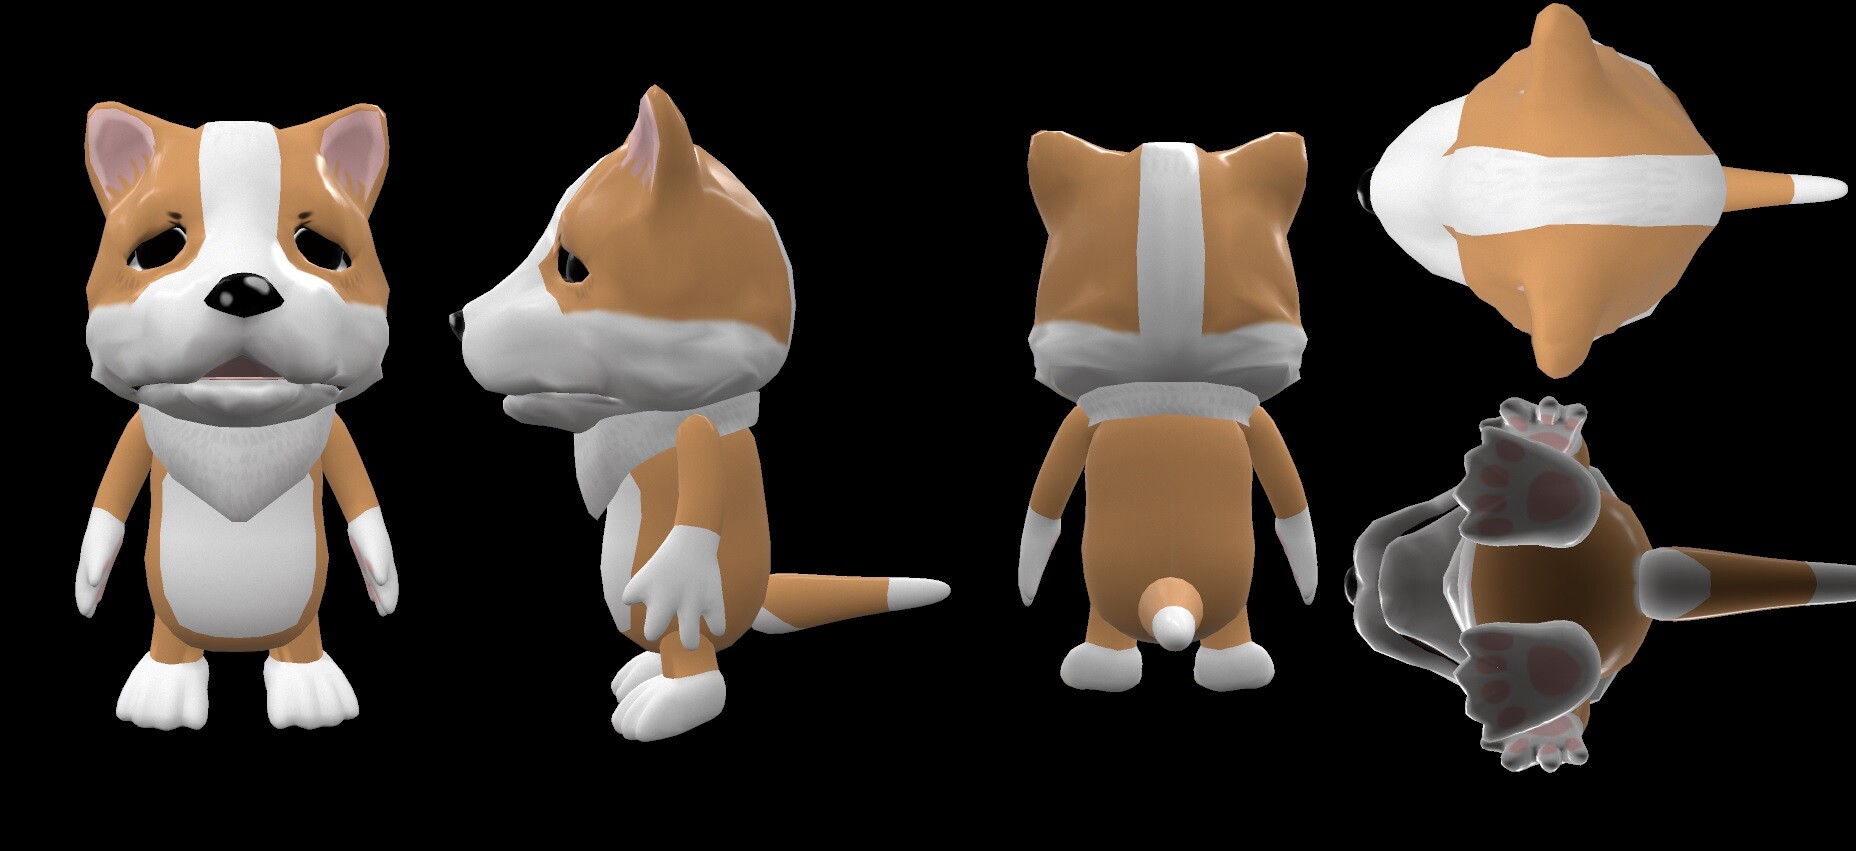 ArtStation - Animal cartoon character - cogi Low-poly 3D model